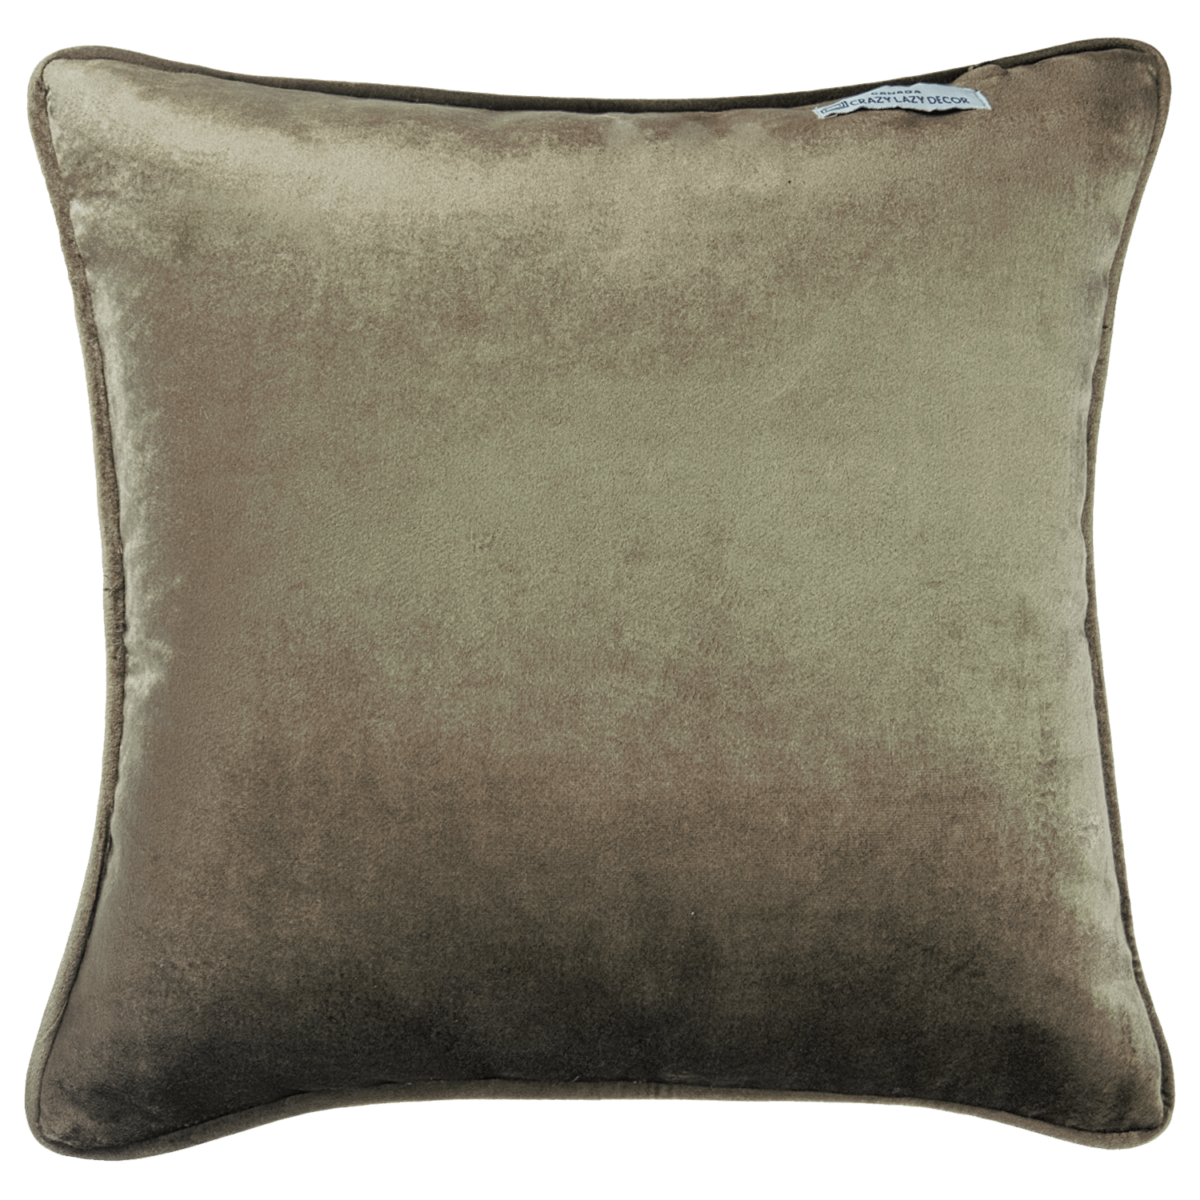 Aqua copper printed velvet decorative pillow cover